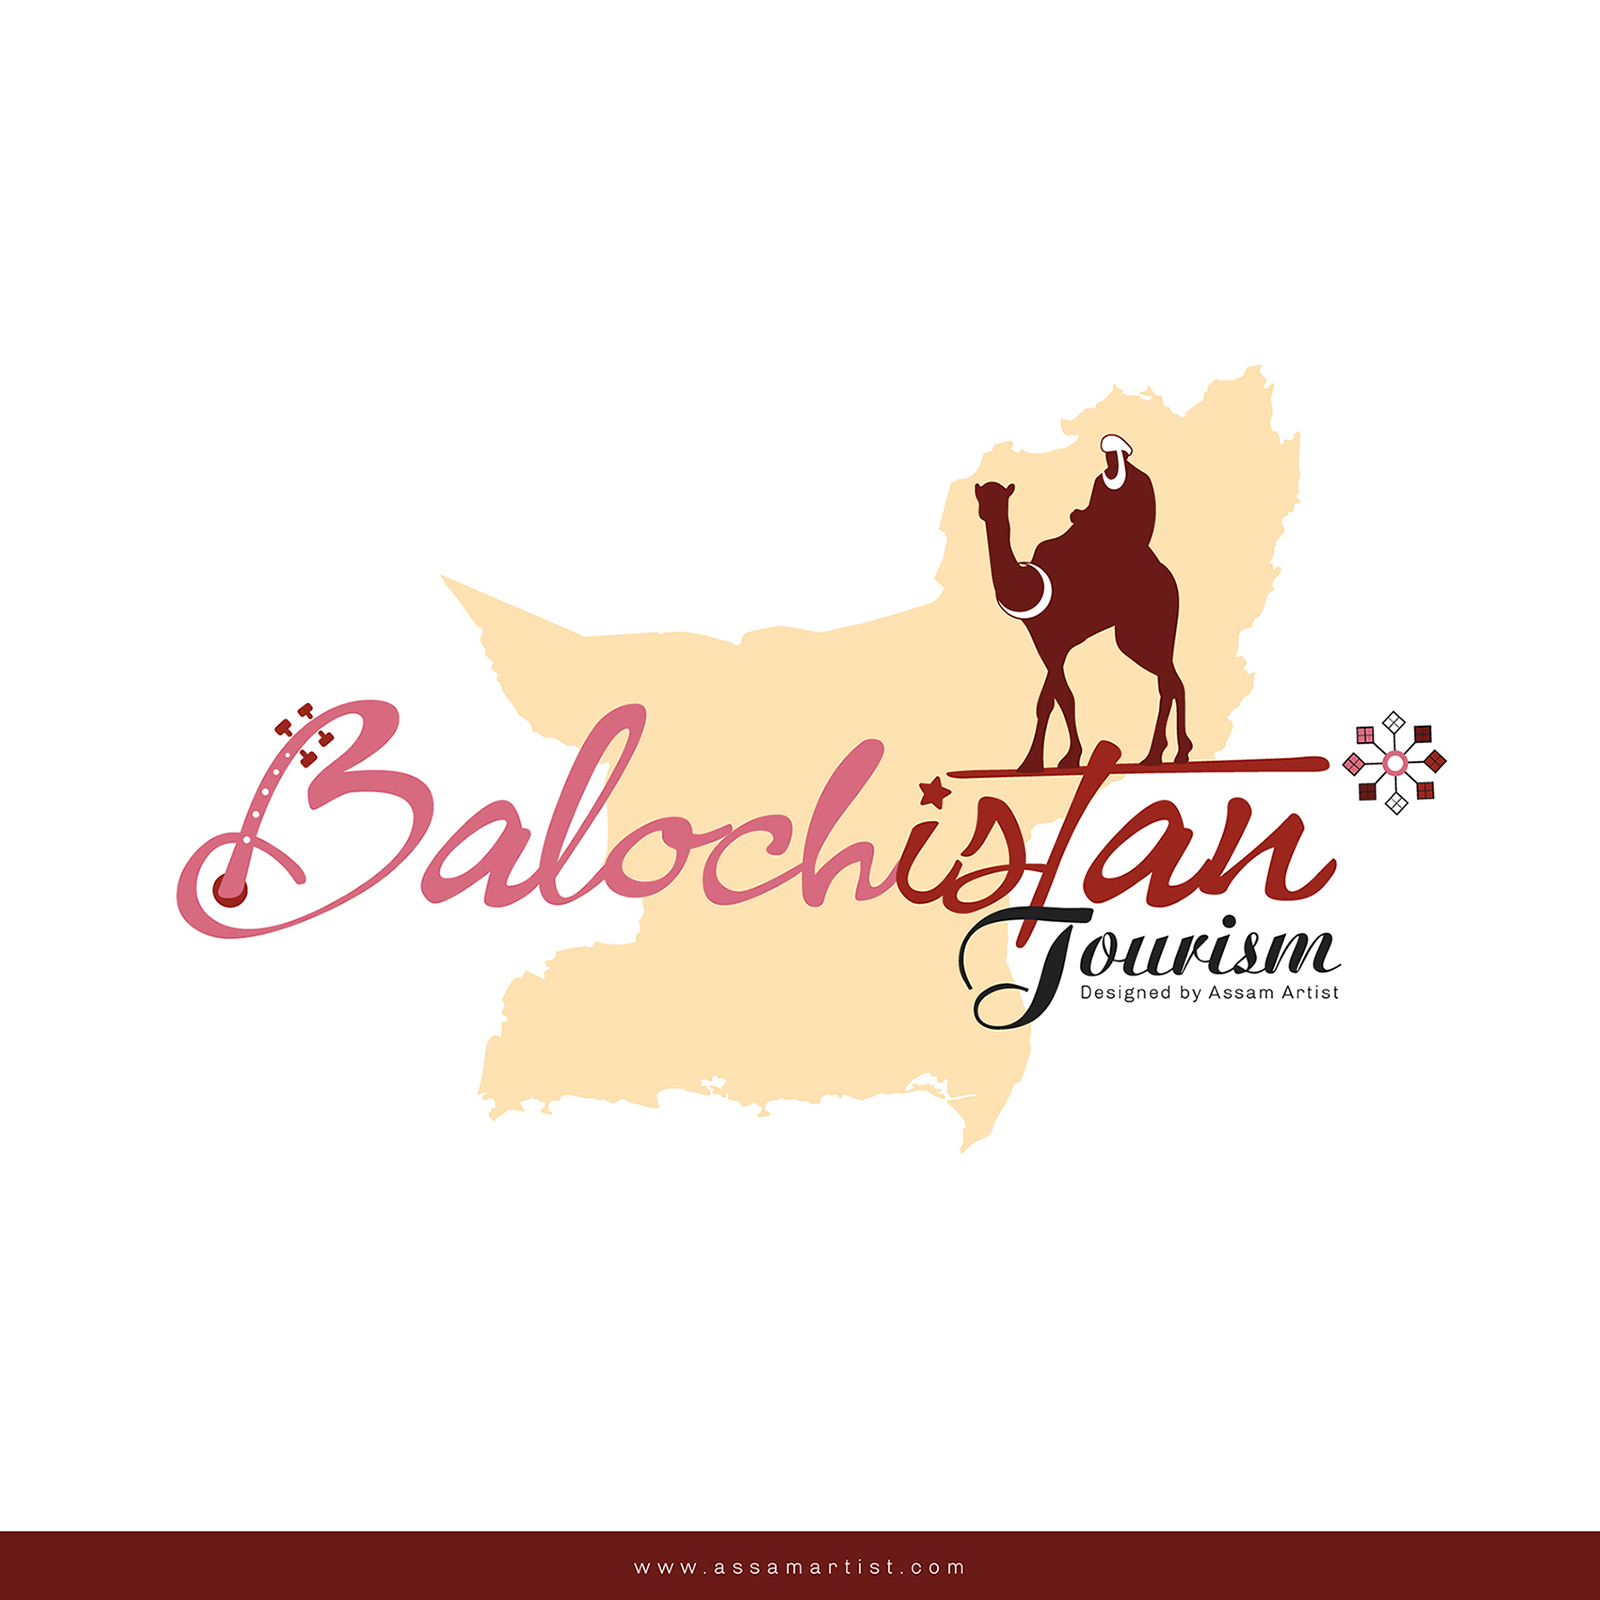 Balochistan tourism logo & Pakistan tourism logo